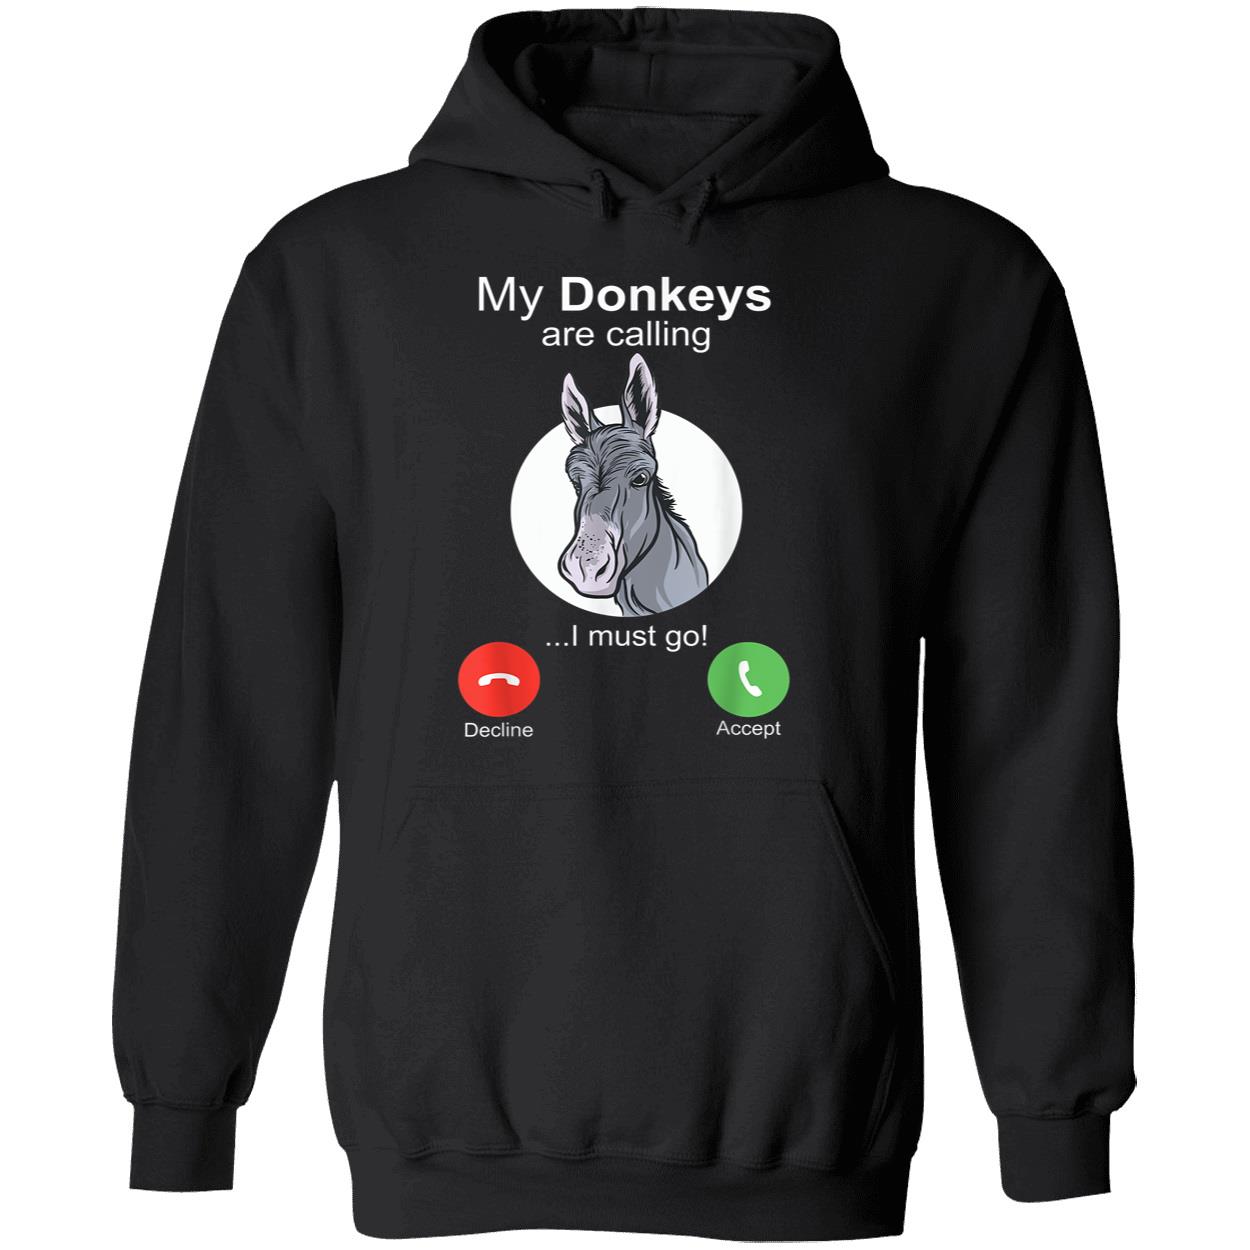 My Donkeys Are Calling I Must Go Shirt